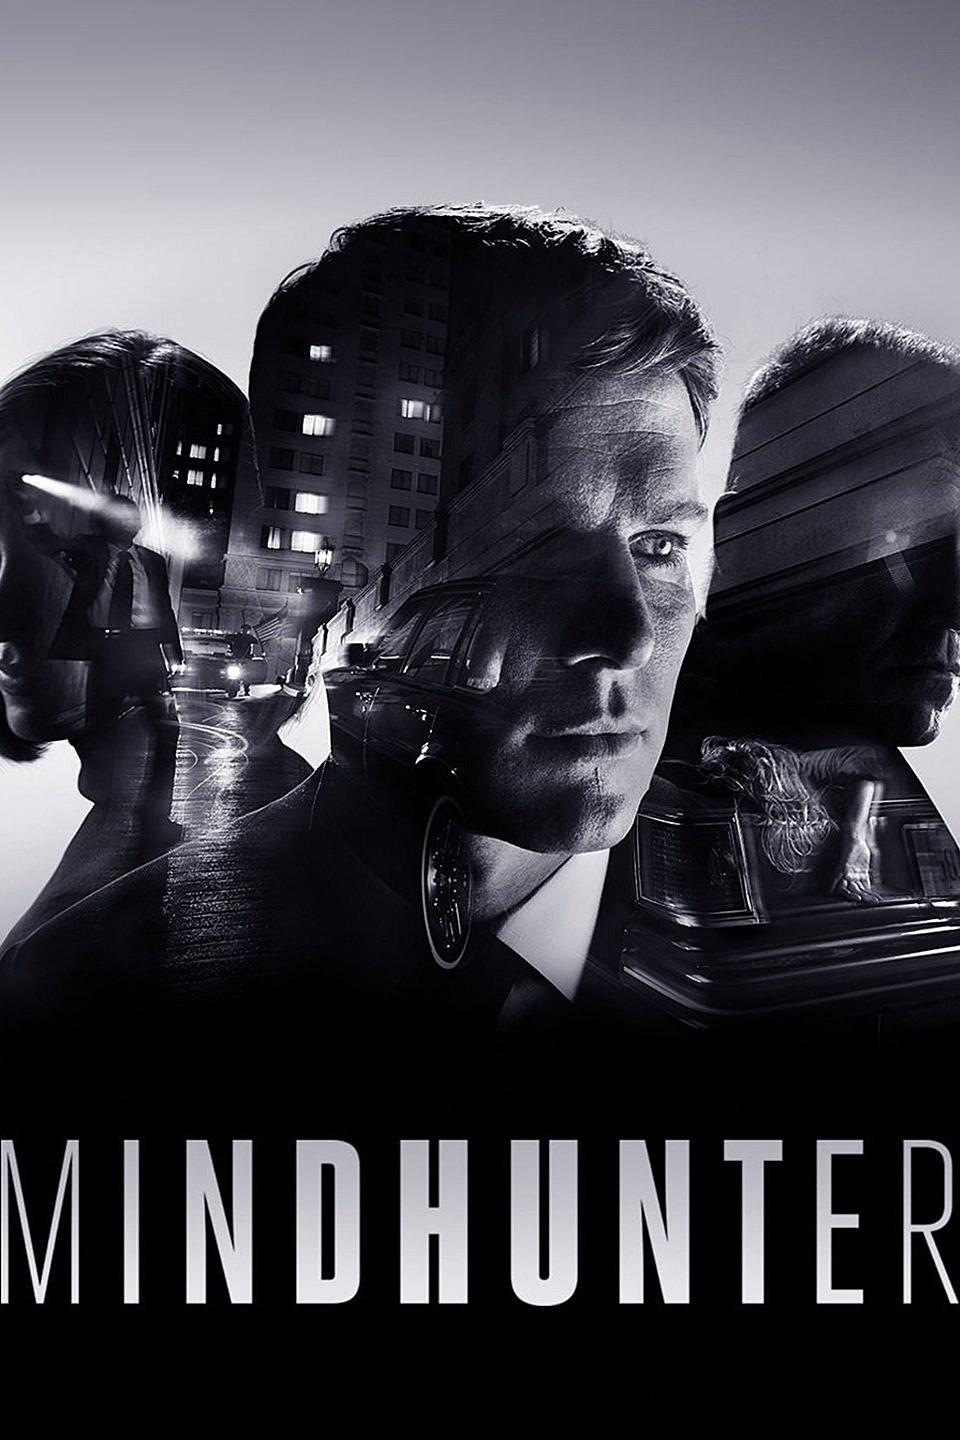 Serien "Mindhunter" kan ses på Netflix.